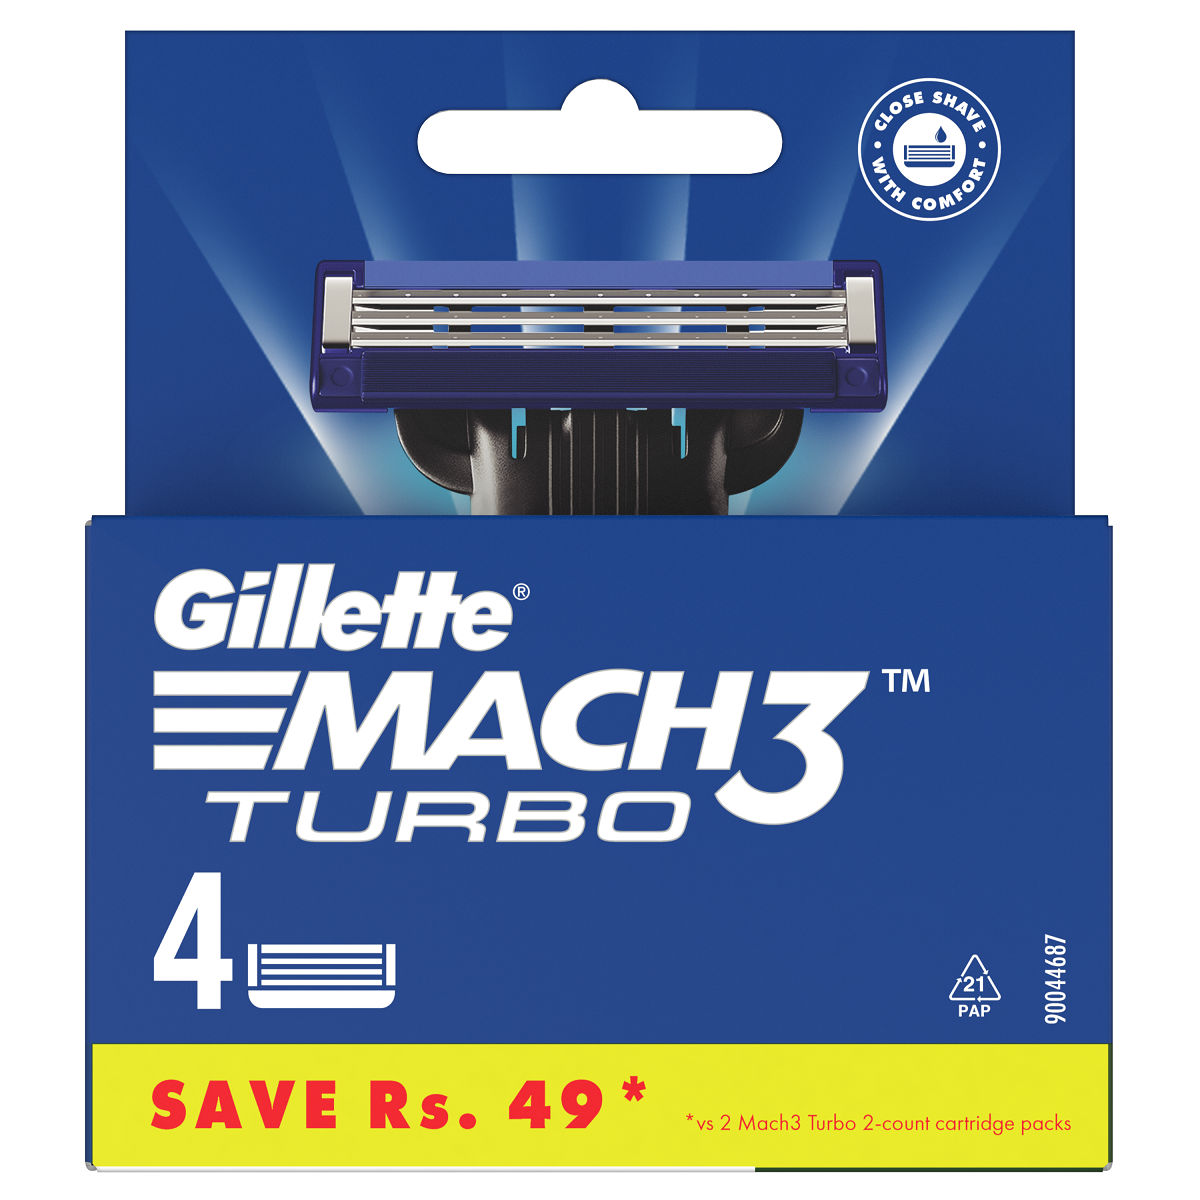 Gillette Mach 3 Turbo Manual Shaving Razor Blades (Cartridge) 4s pack (Save Rs.49/-)